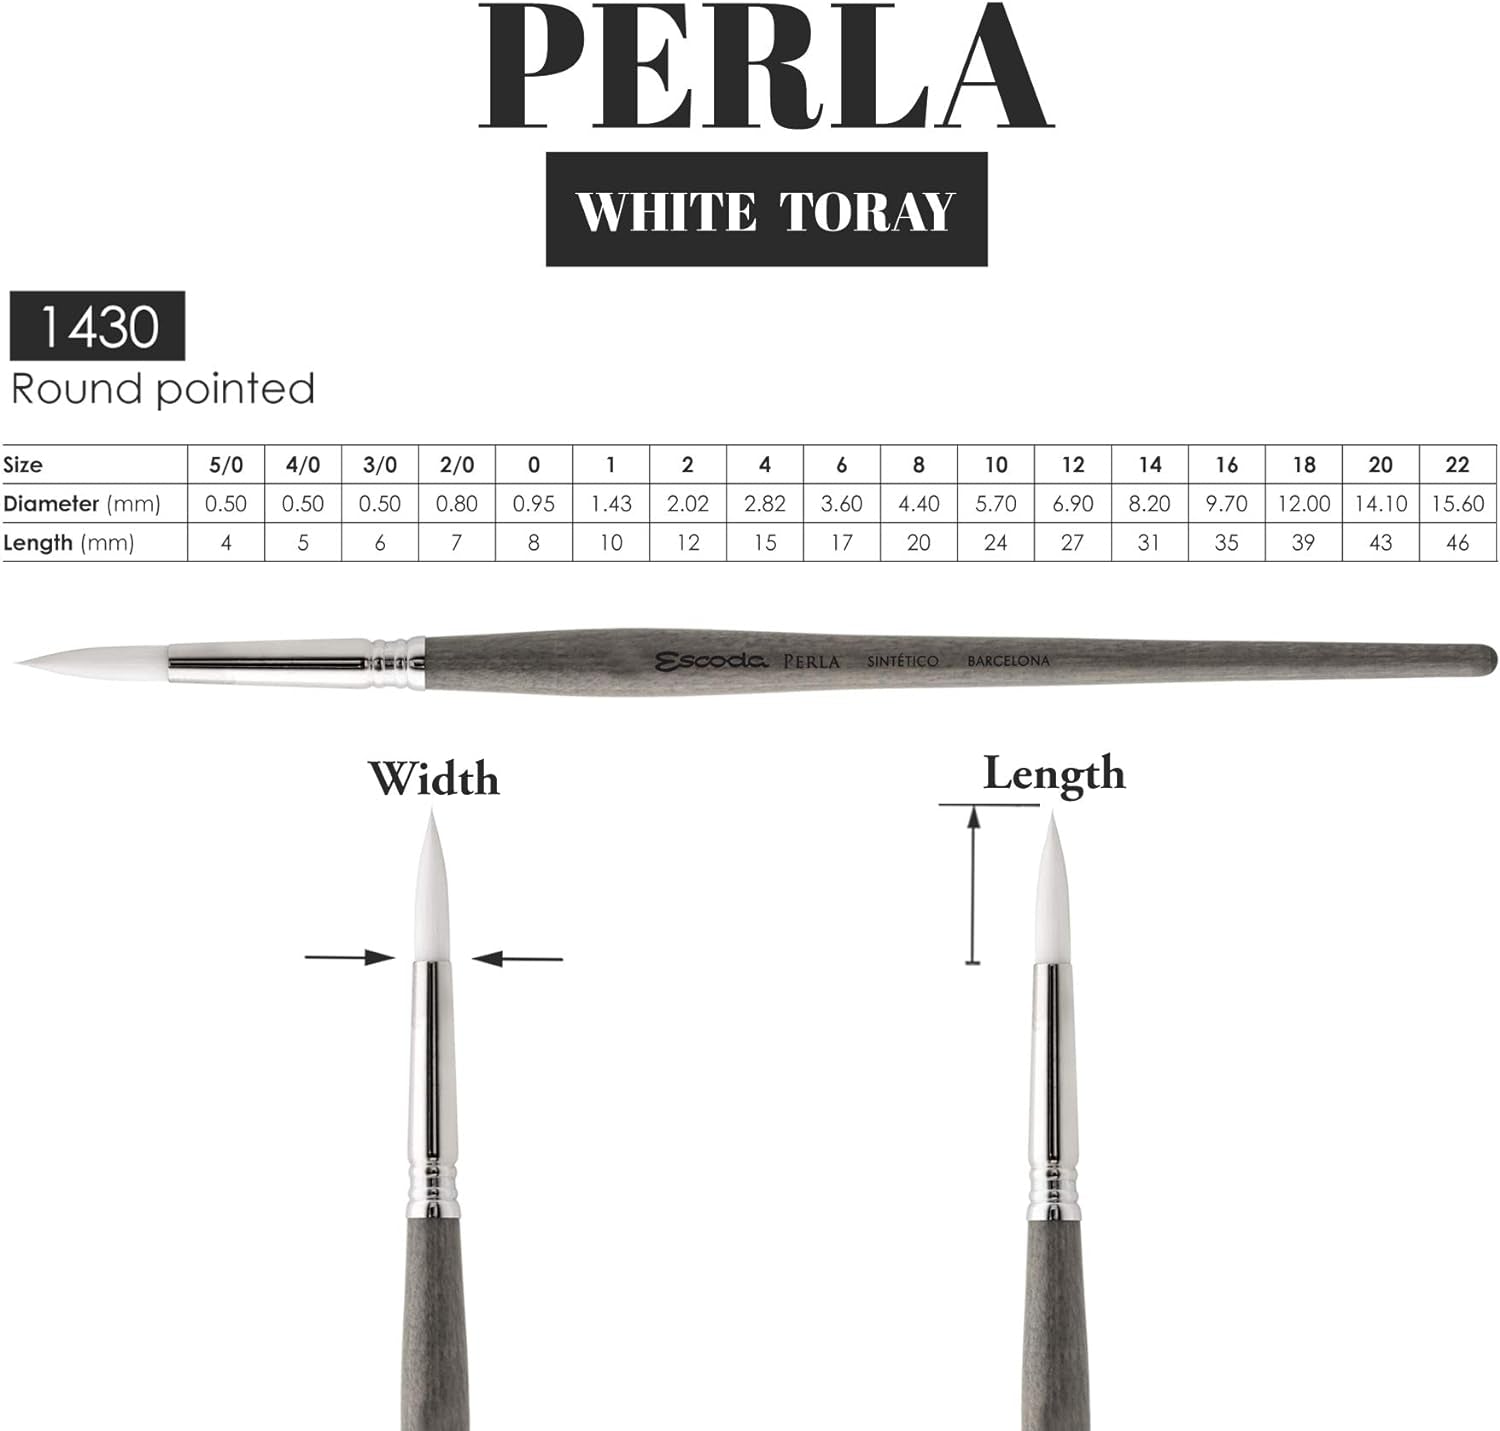 Perla Series 1430 Short Handle round Artist Watercolor Brush, 6, White Toray Filament